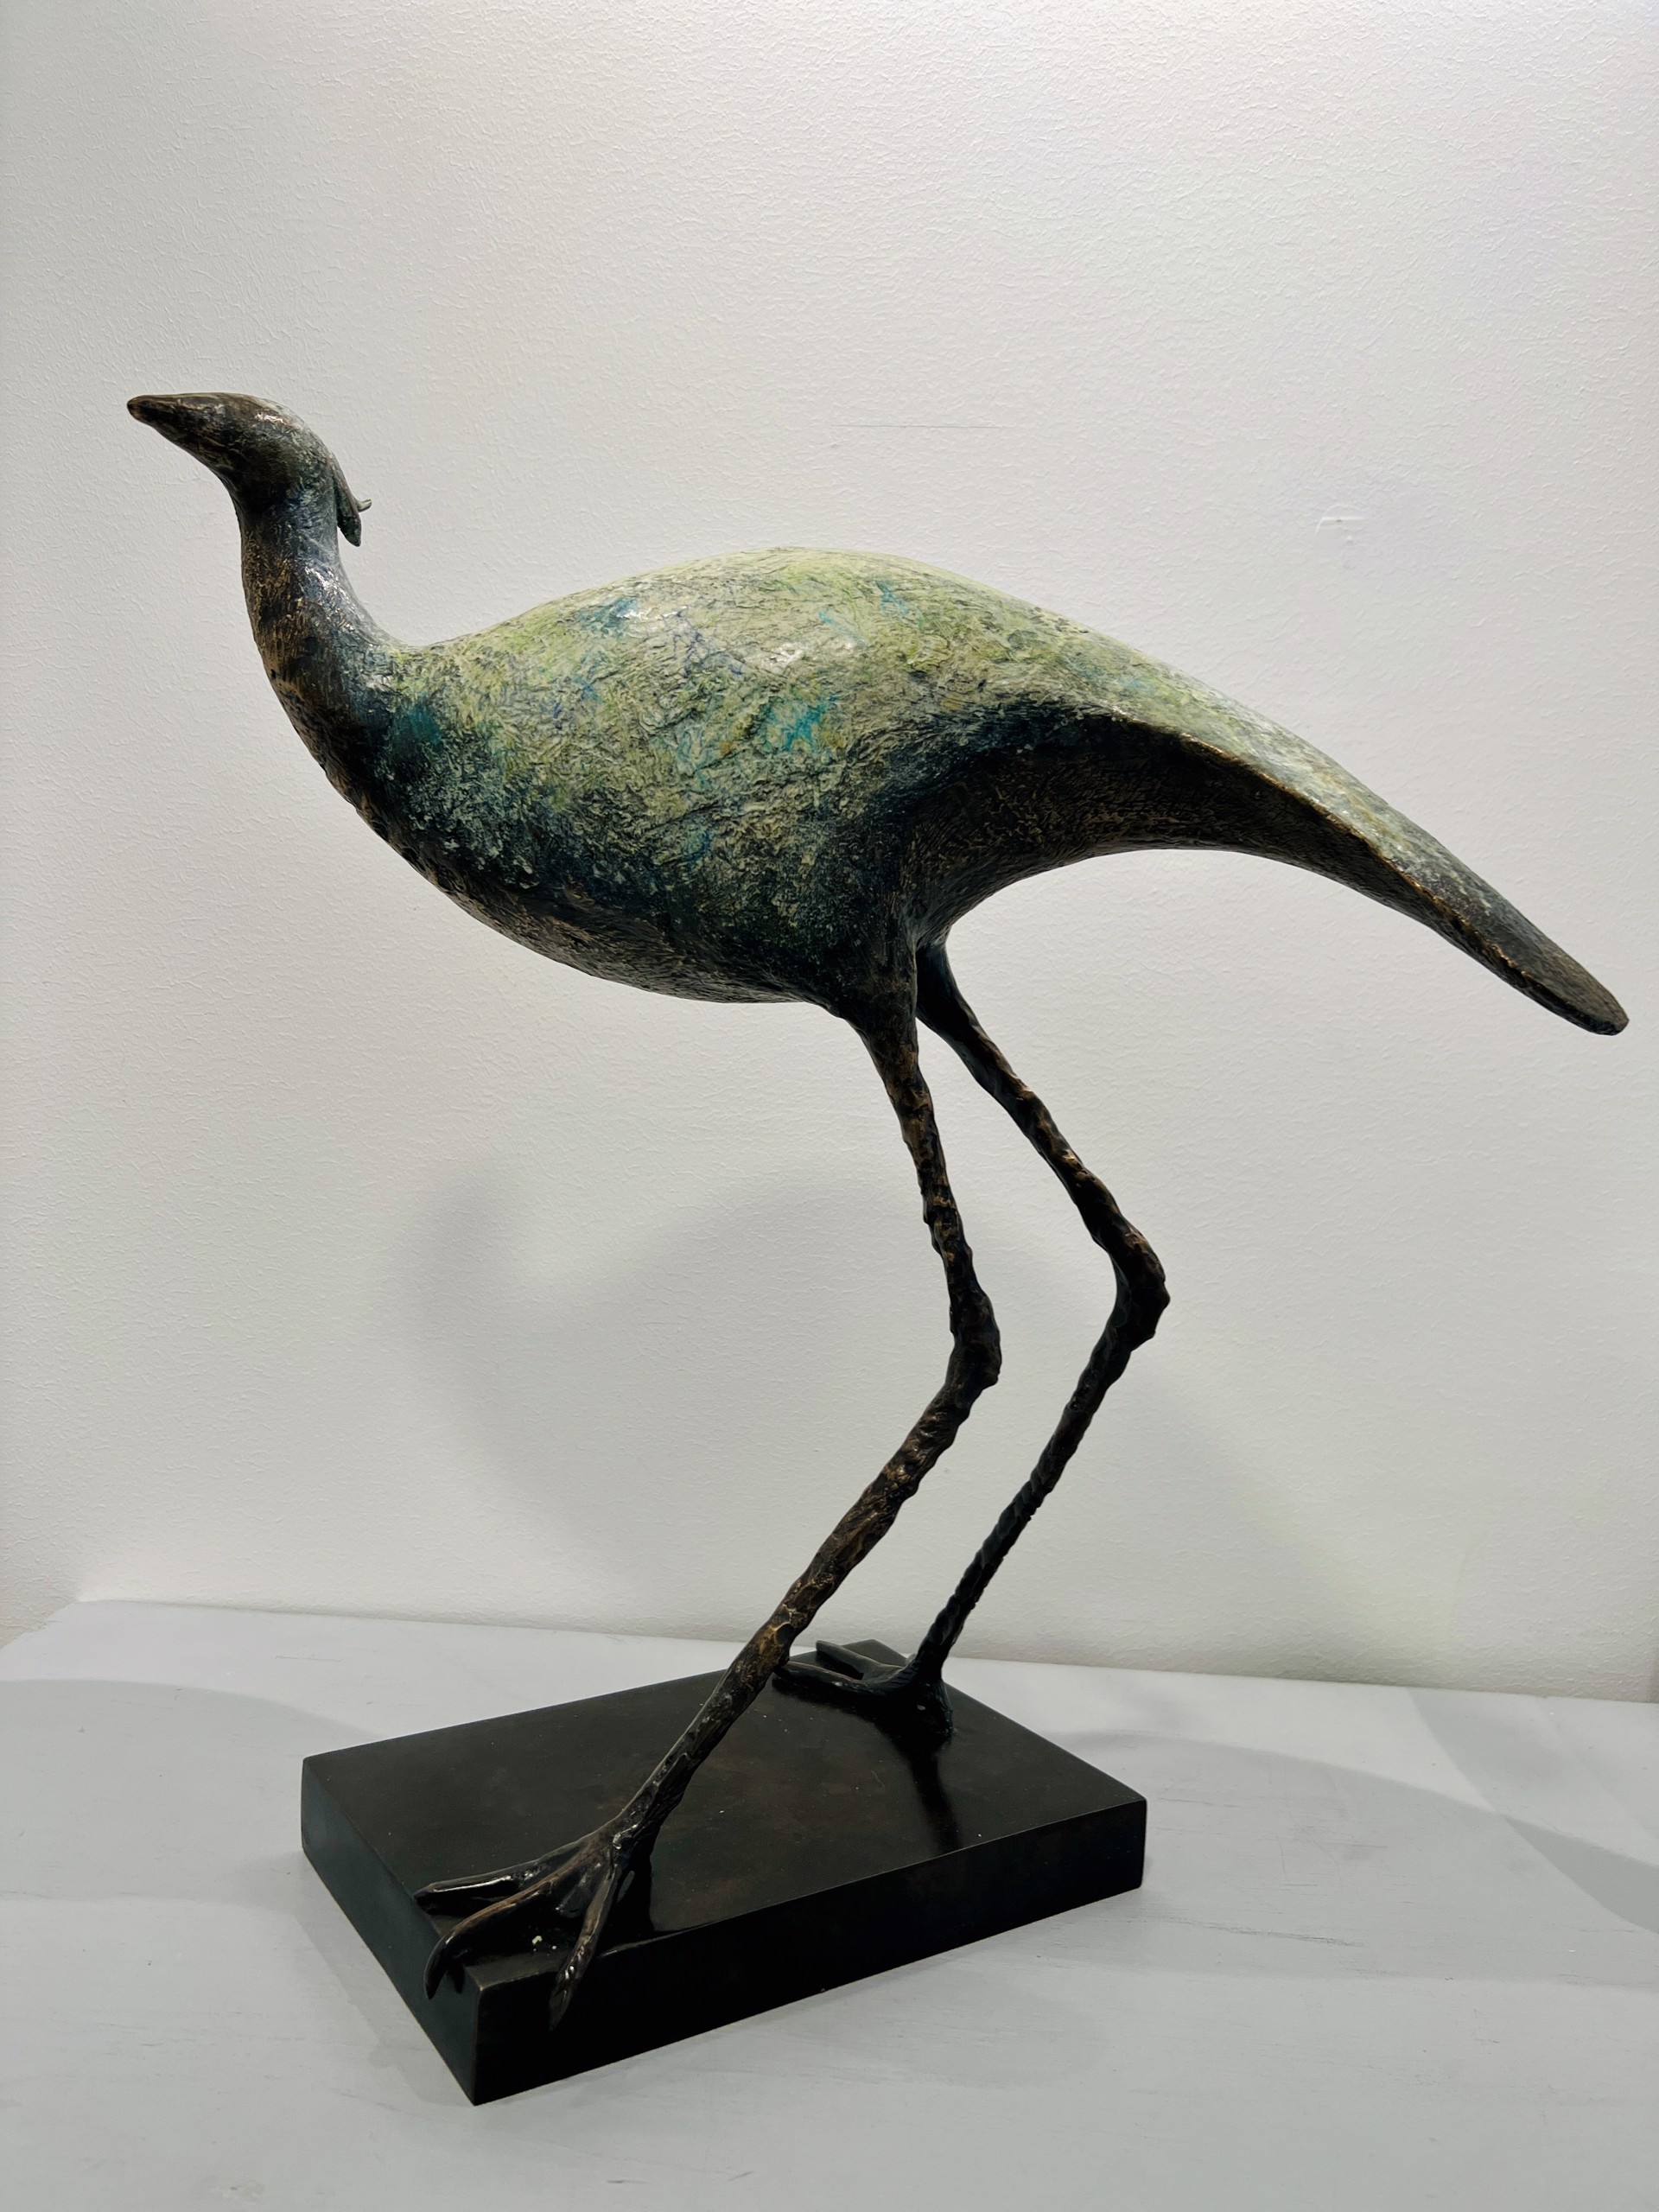 Small Bird with Long Legs by Copper Tritscheller